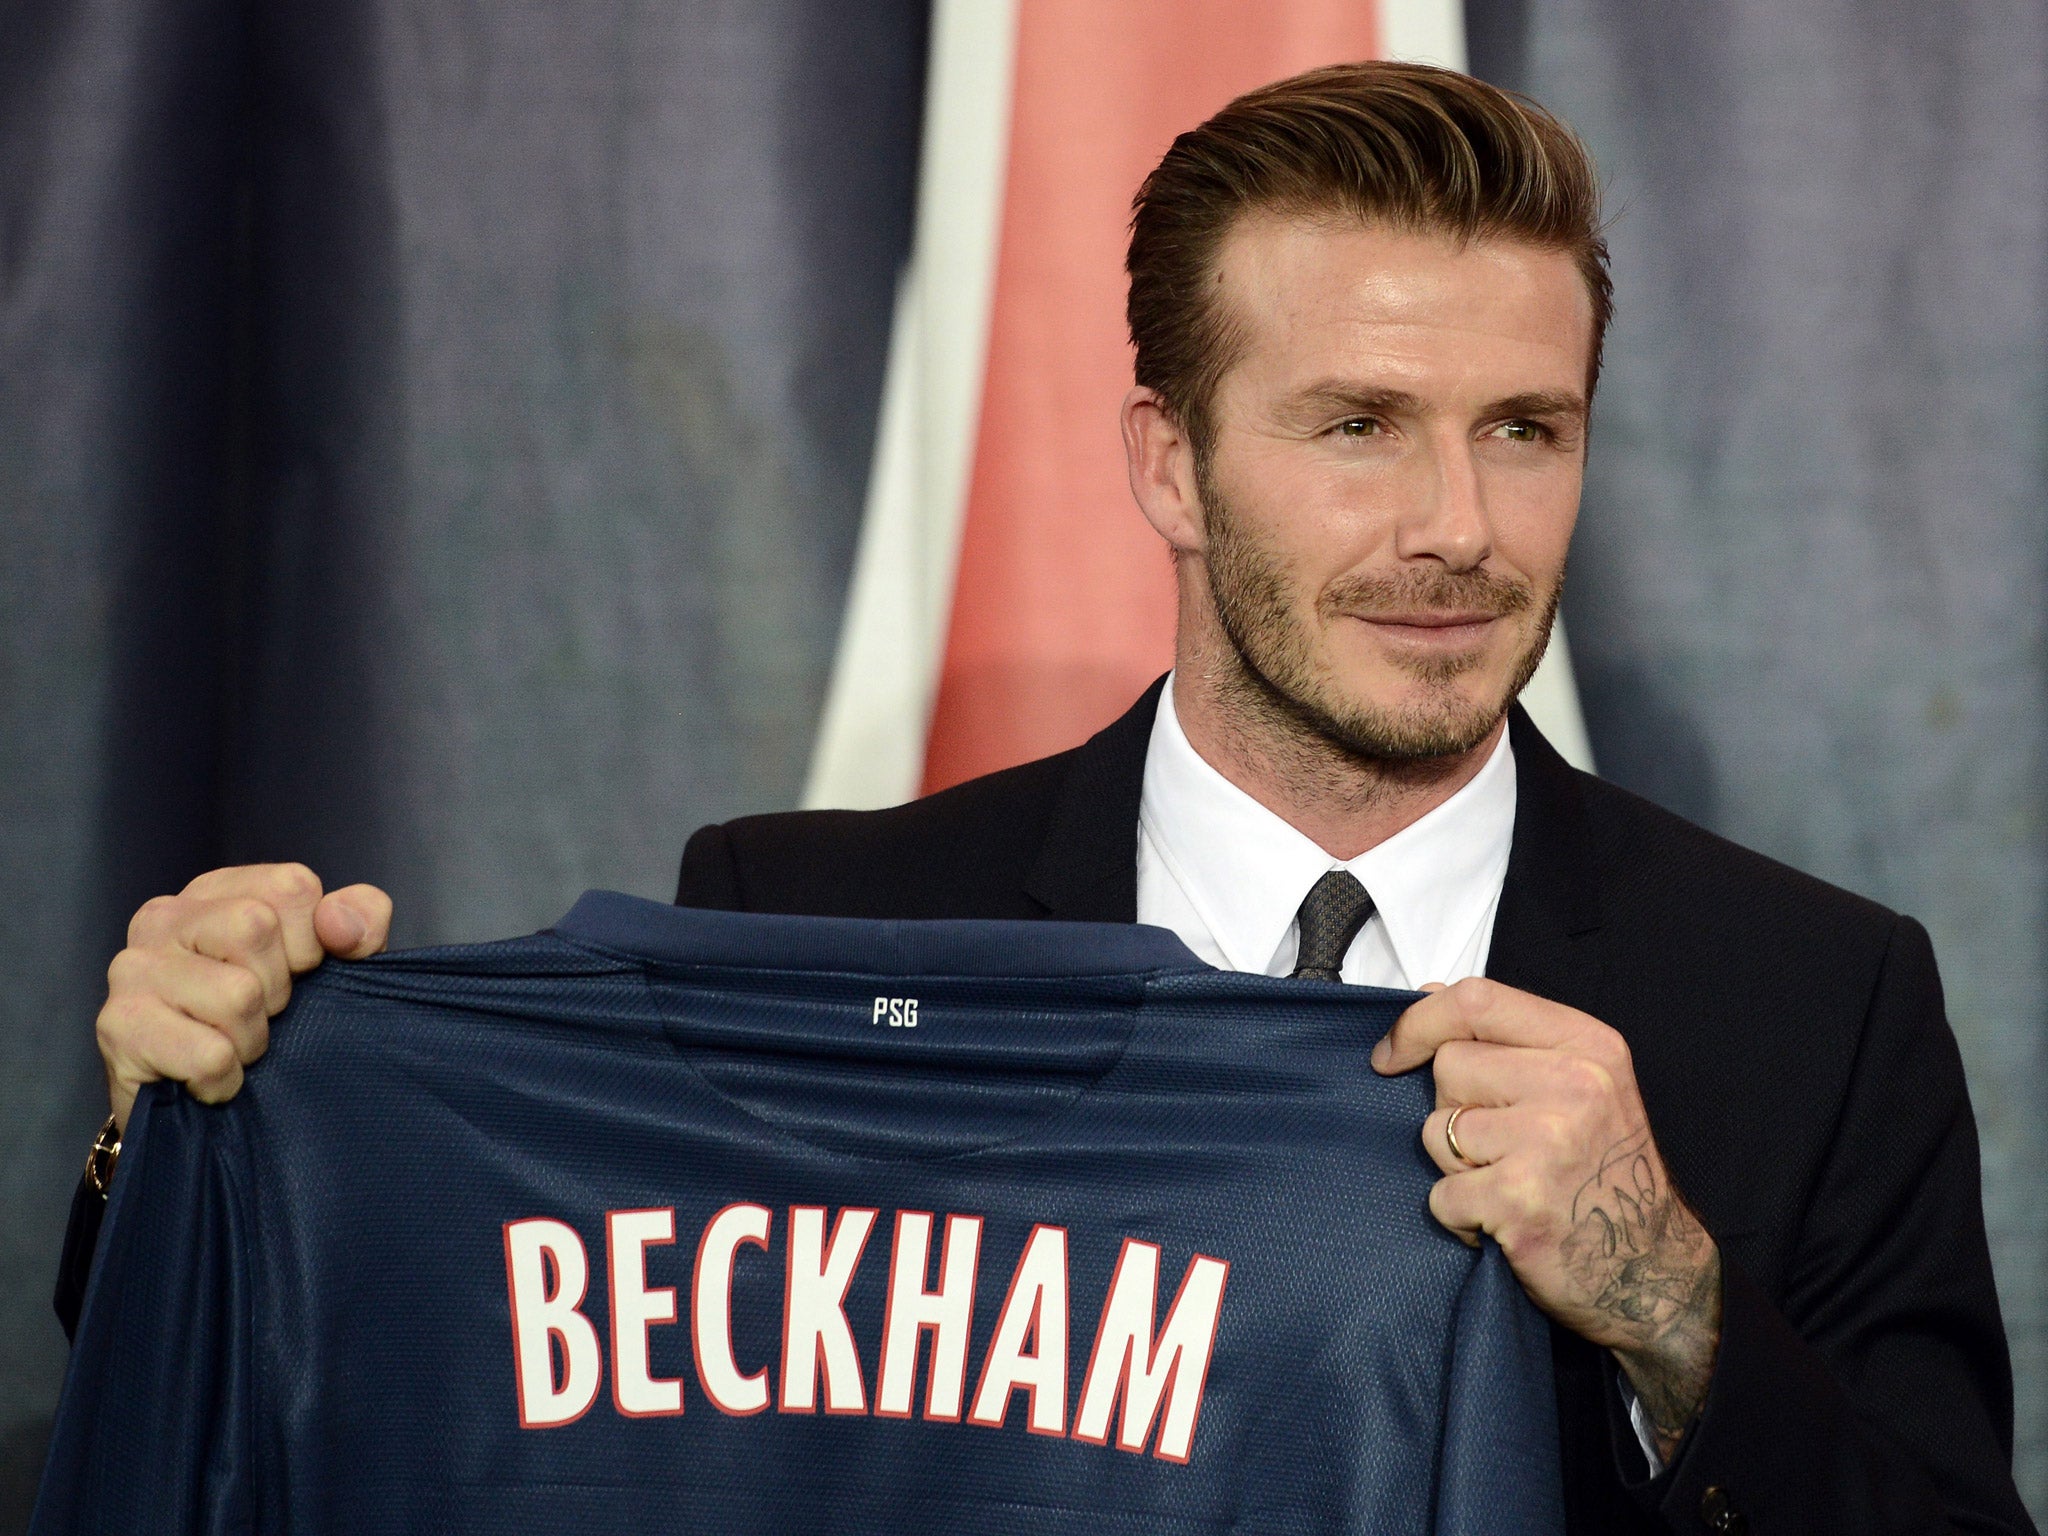 In January 2013 David Beckham joined Paris Saint-Germain